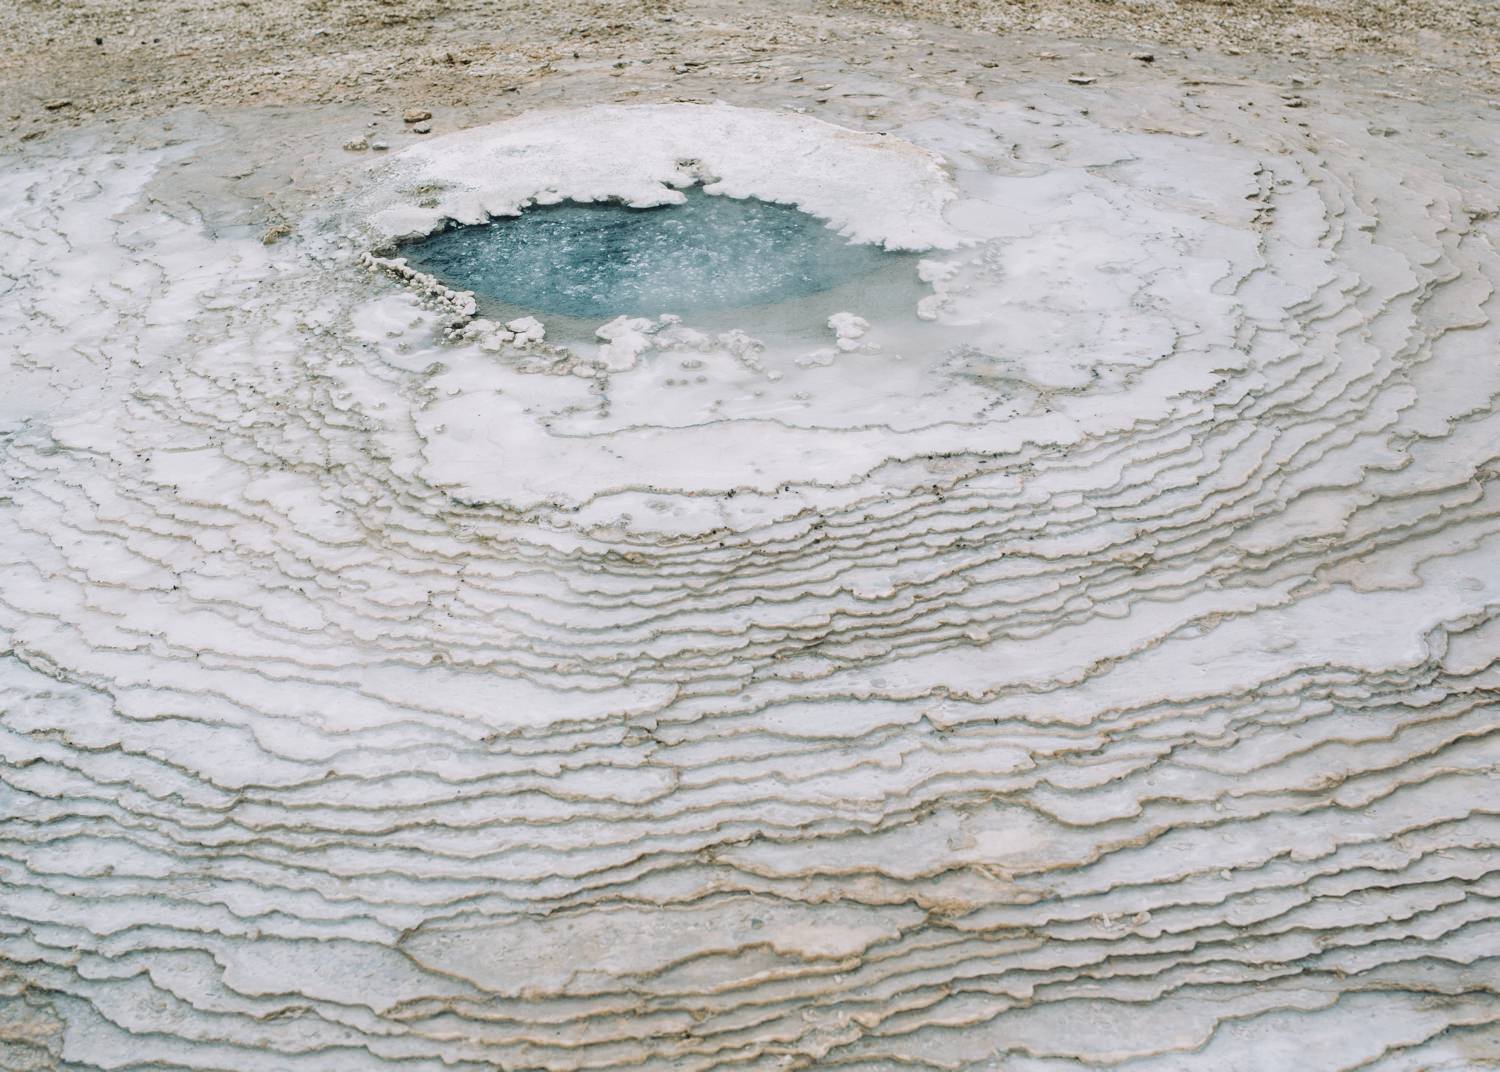 iceland-geothermal-hotspring-cameron-zegers-travel-photographer.jpg